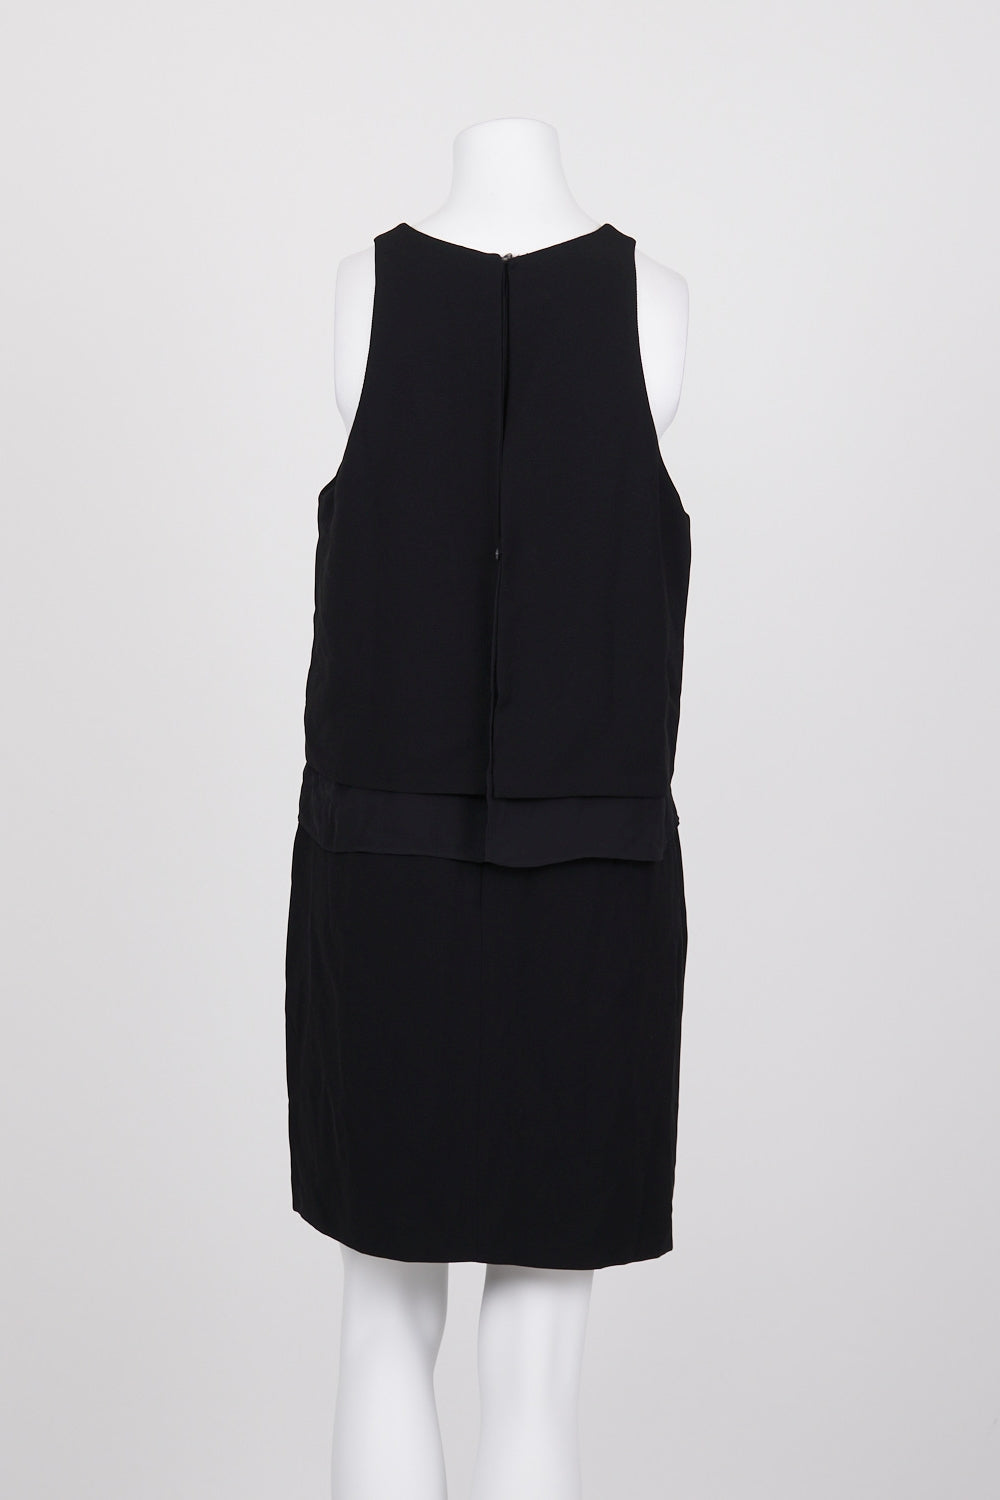 SABA Black Mini Dress 12 